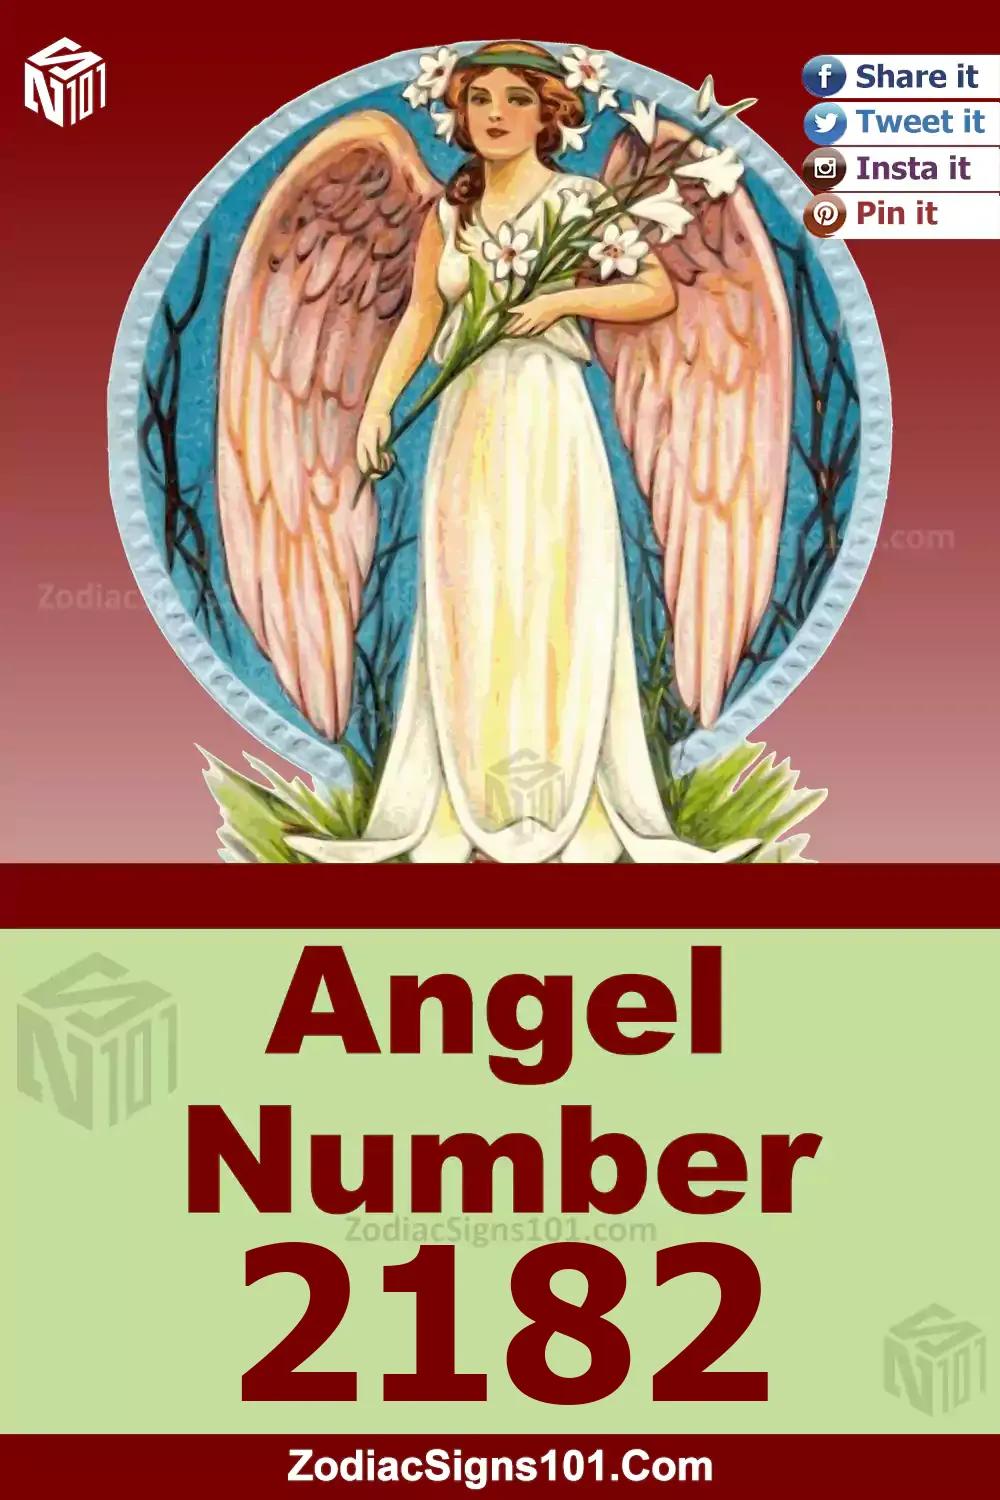 2182-Angel-Number-Meaning.jpg